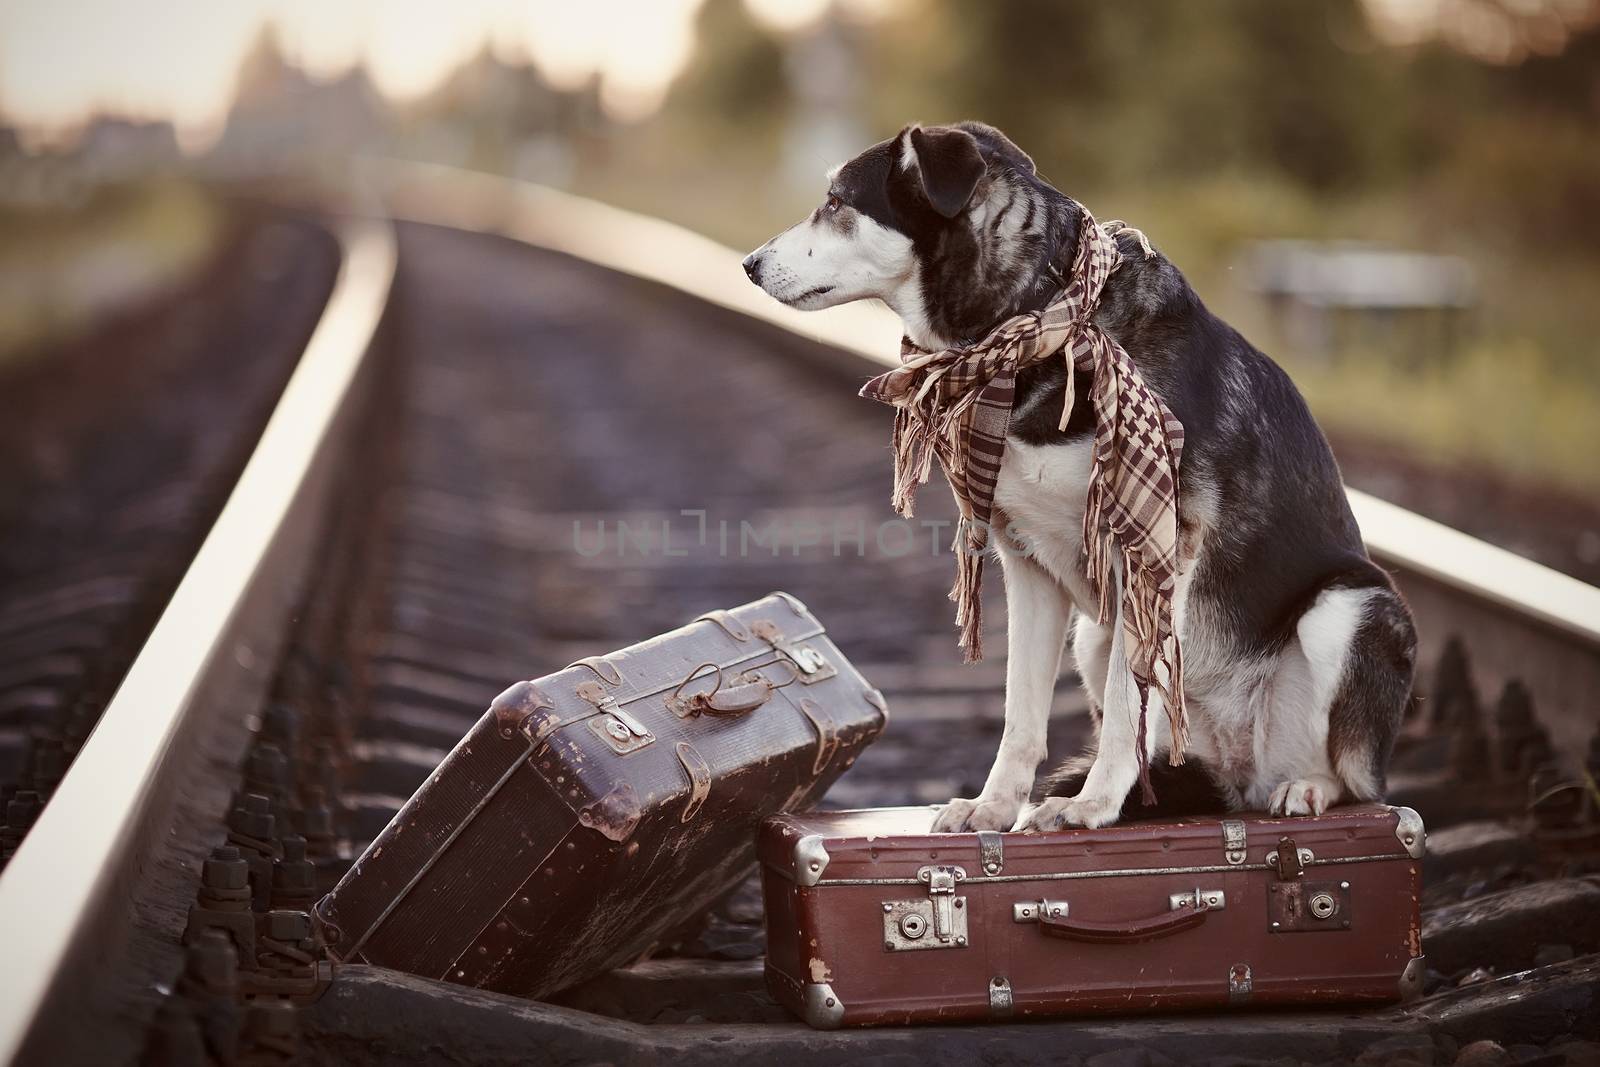 The dog sits on a suitcase on rails by Azaliya